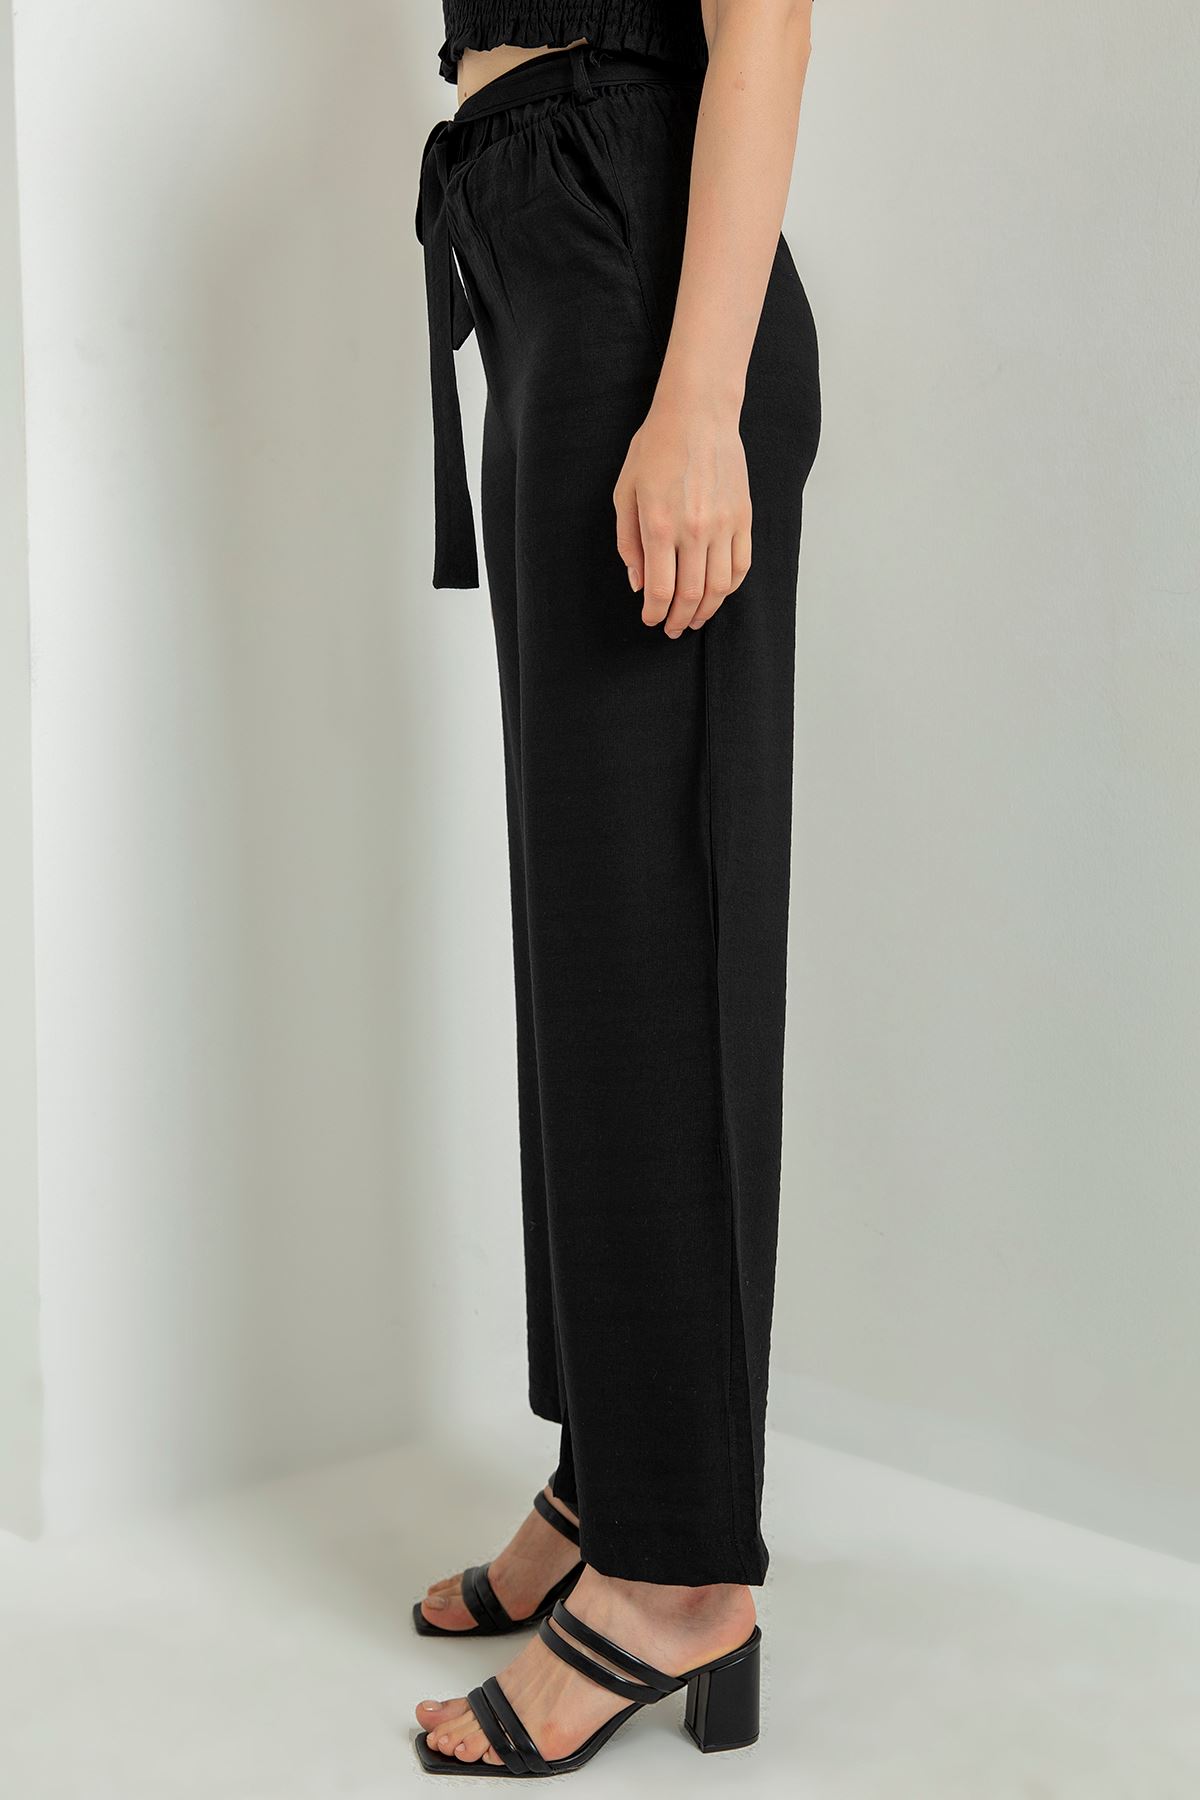 Linen Fabric Long Wide Belted Women'S Trouser - Black